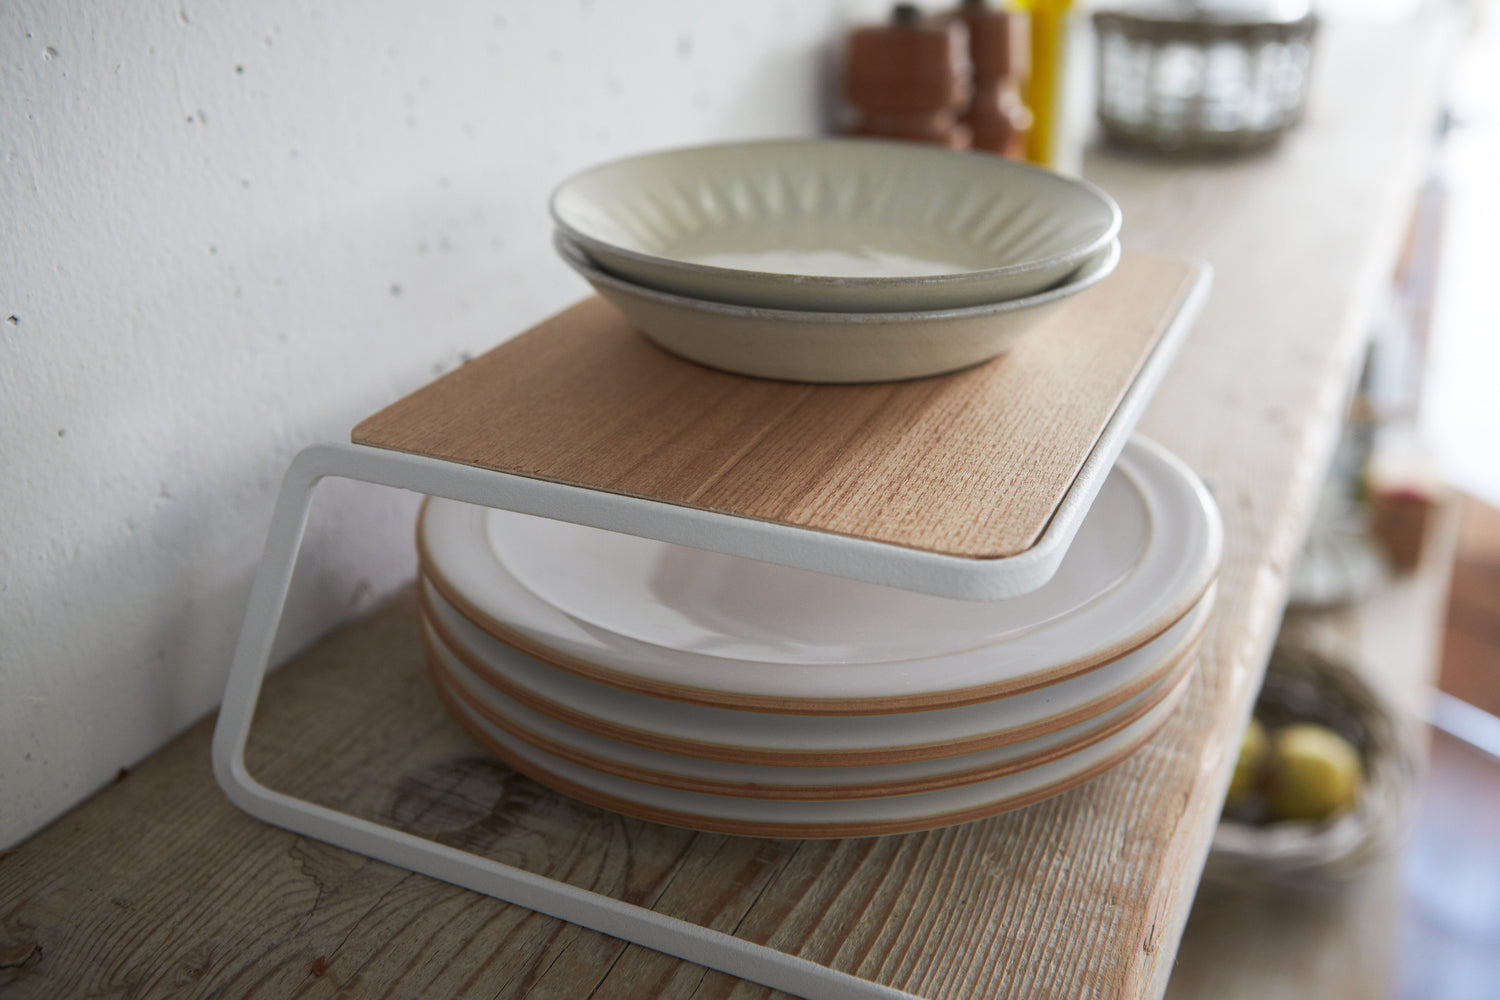 View 4 - Side view of Dish Riser displaying plates on shelf by Yamazaki Home.